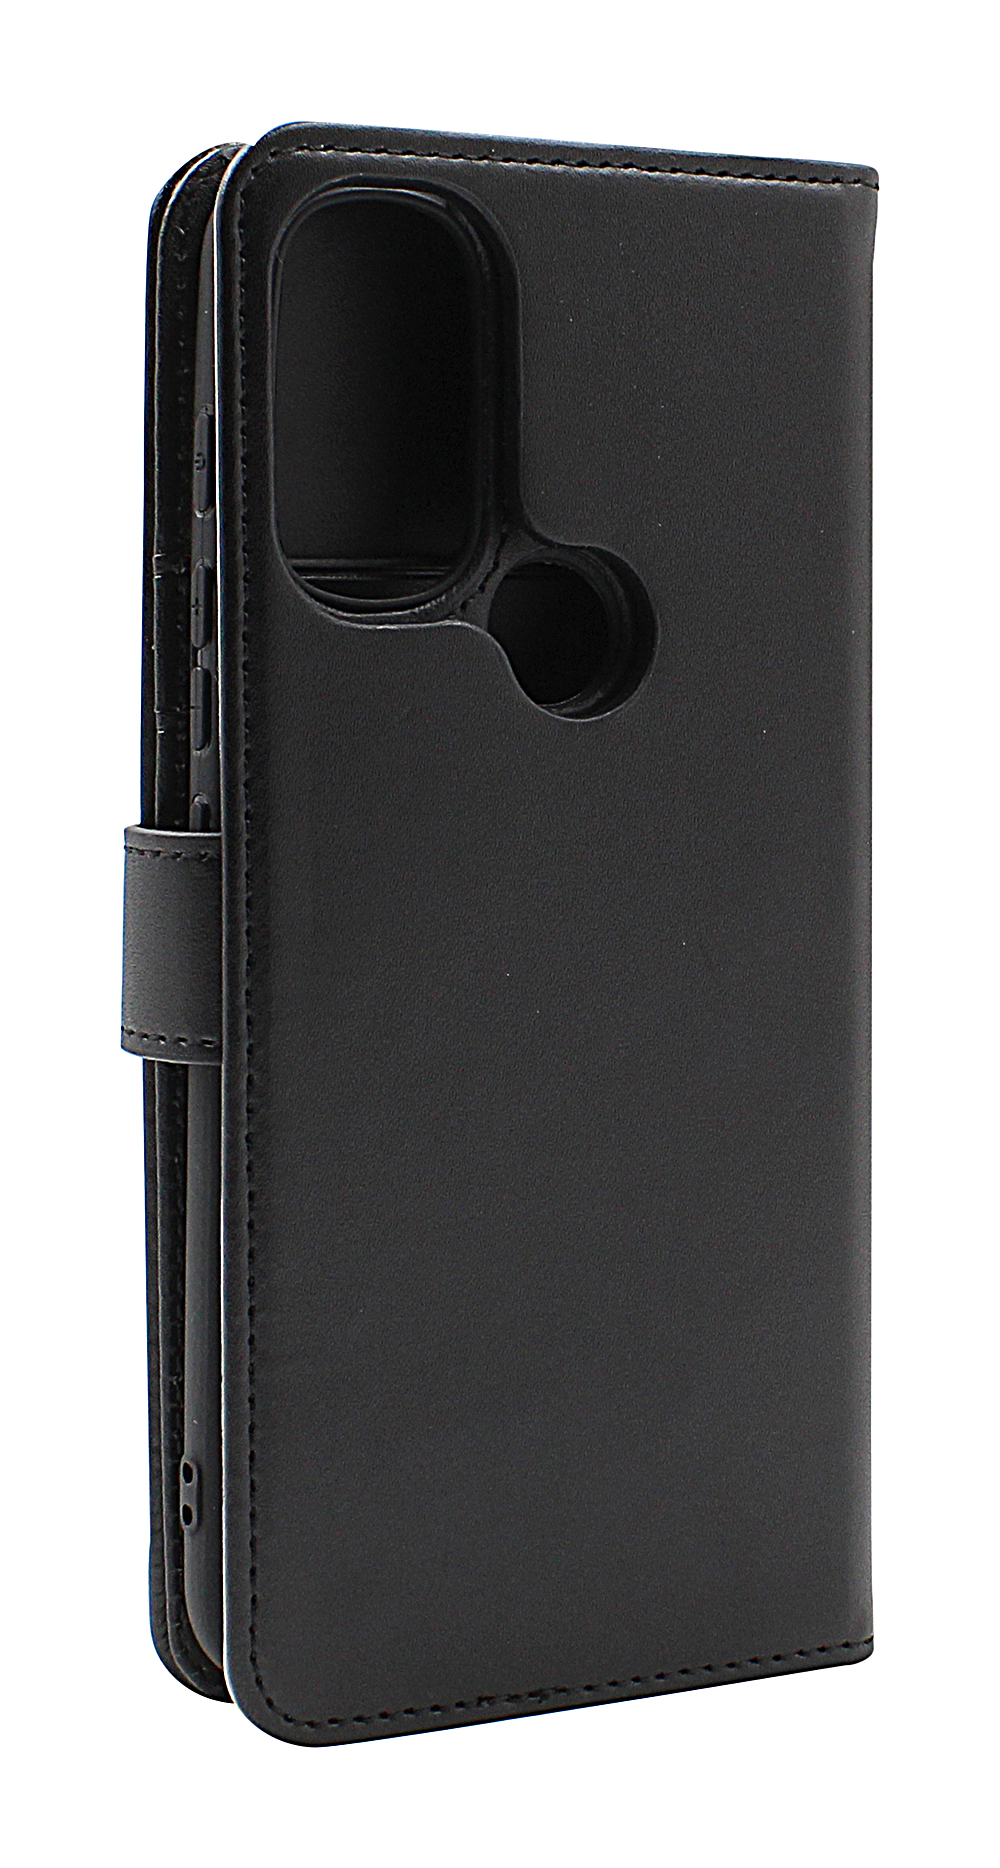 Skimblocker Magnet Wallet Motorola Moto G71